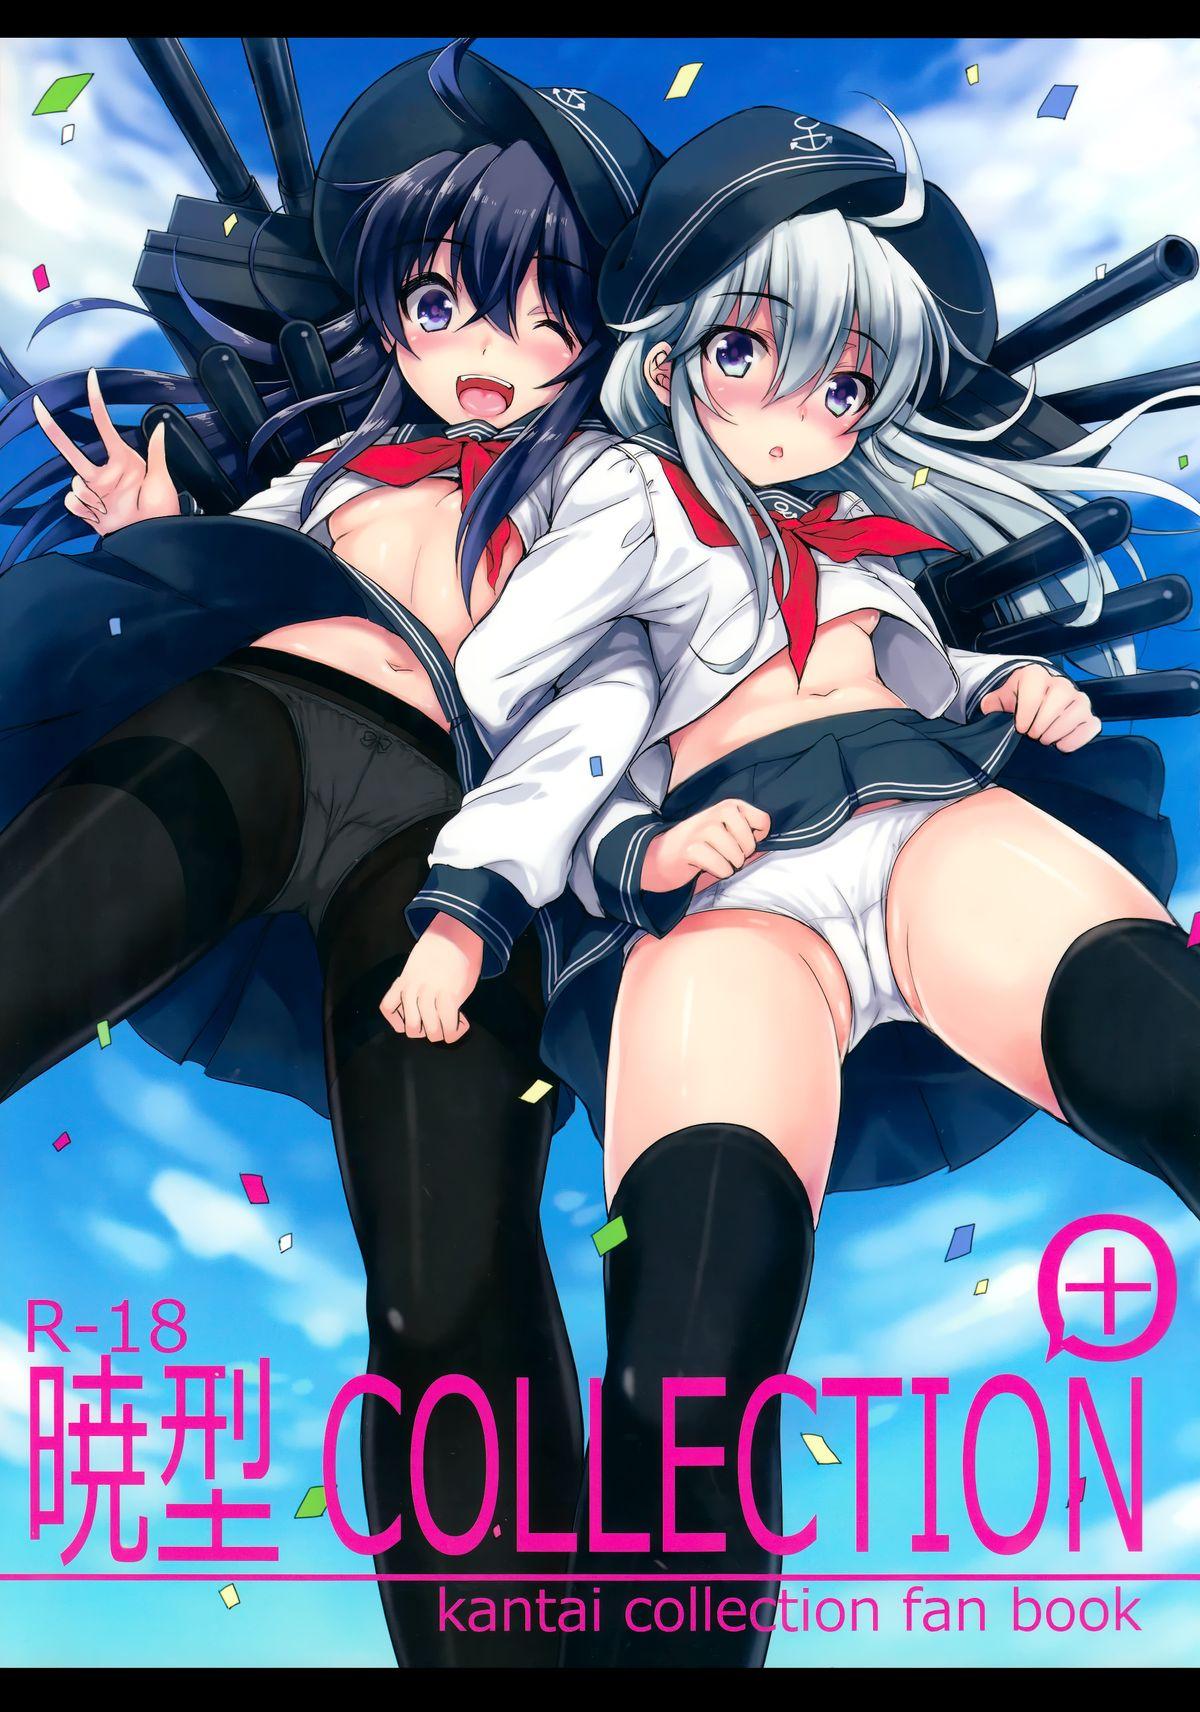 Akatsuki-gata Collection+ 1